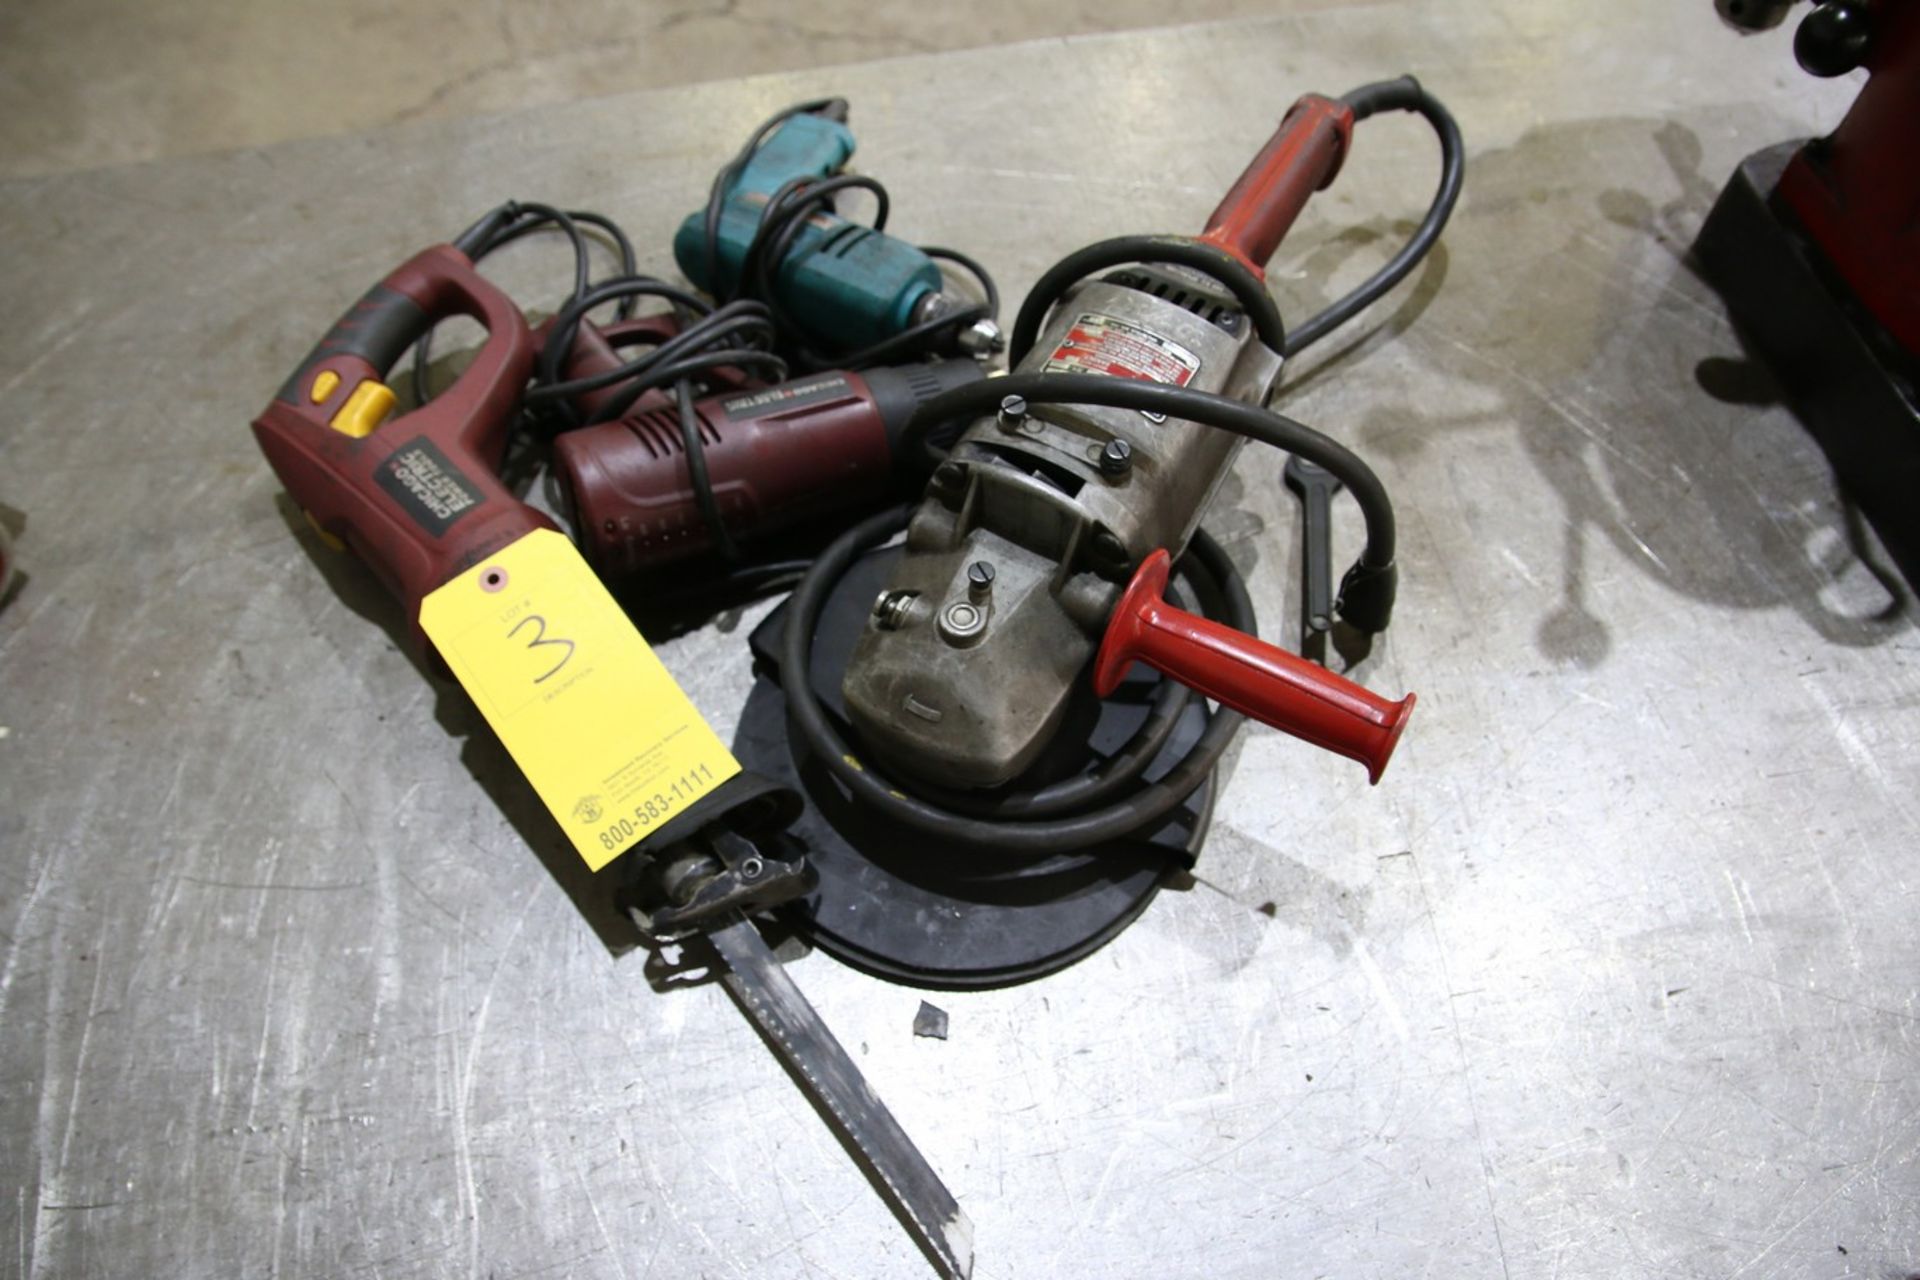 Lot of Hand Tools (1) Milwaukee Sander, (1) Hand Drill, (1) Heat Gun and (1) Reciprocating Saw